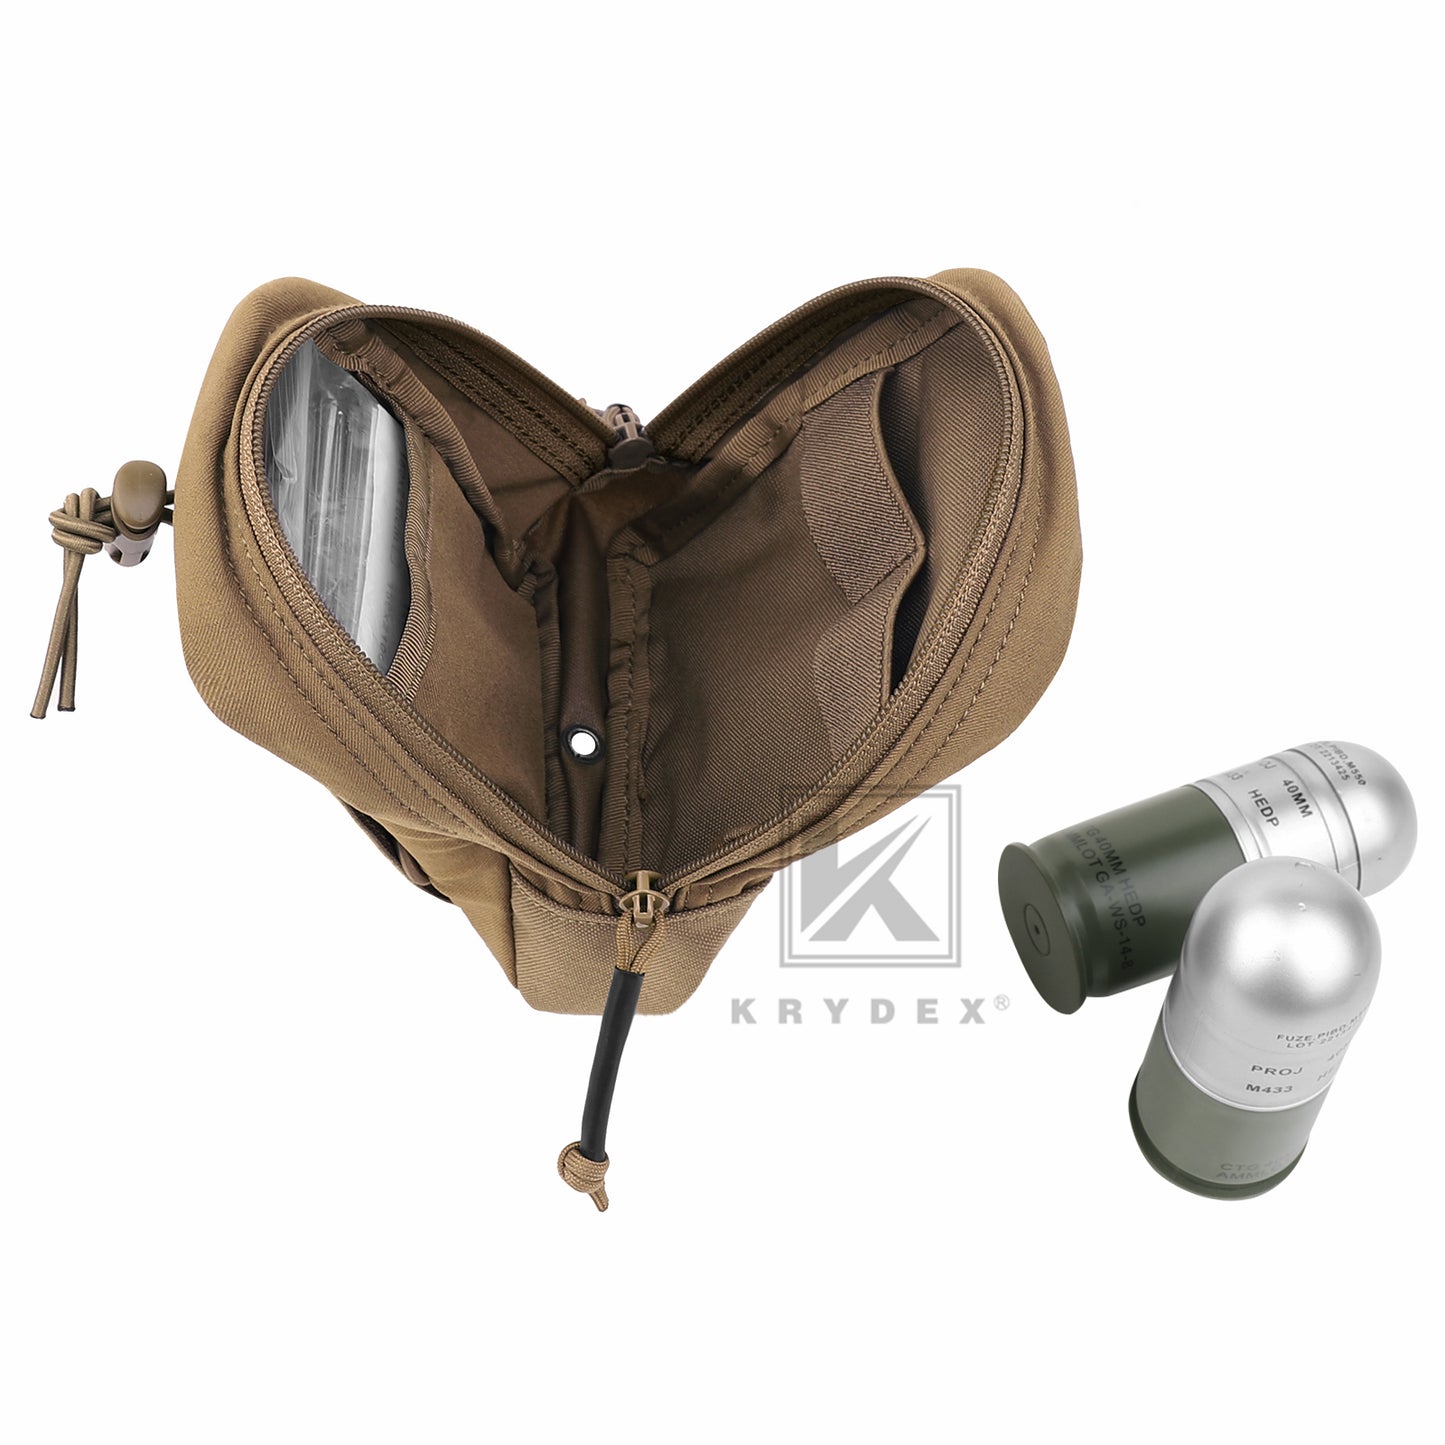 KRYDEX Tactical MOLLE / Belt Vertical GP Pouch General Purpose Bag